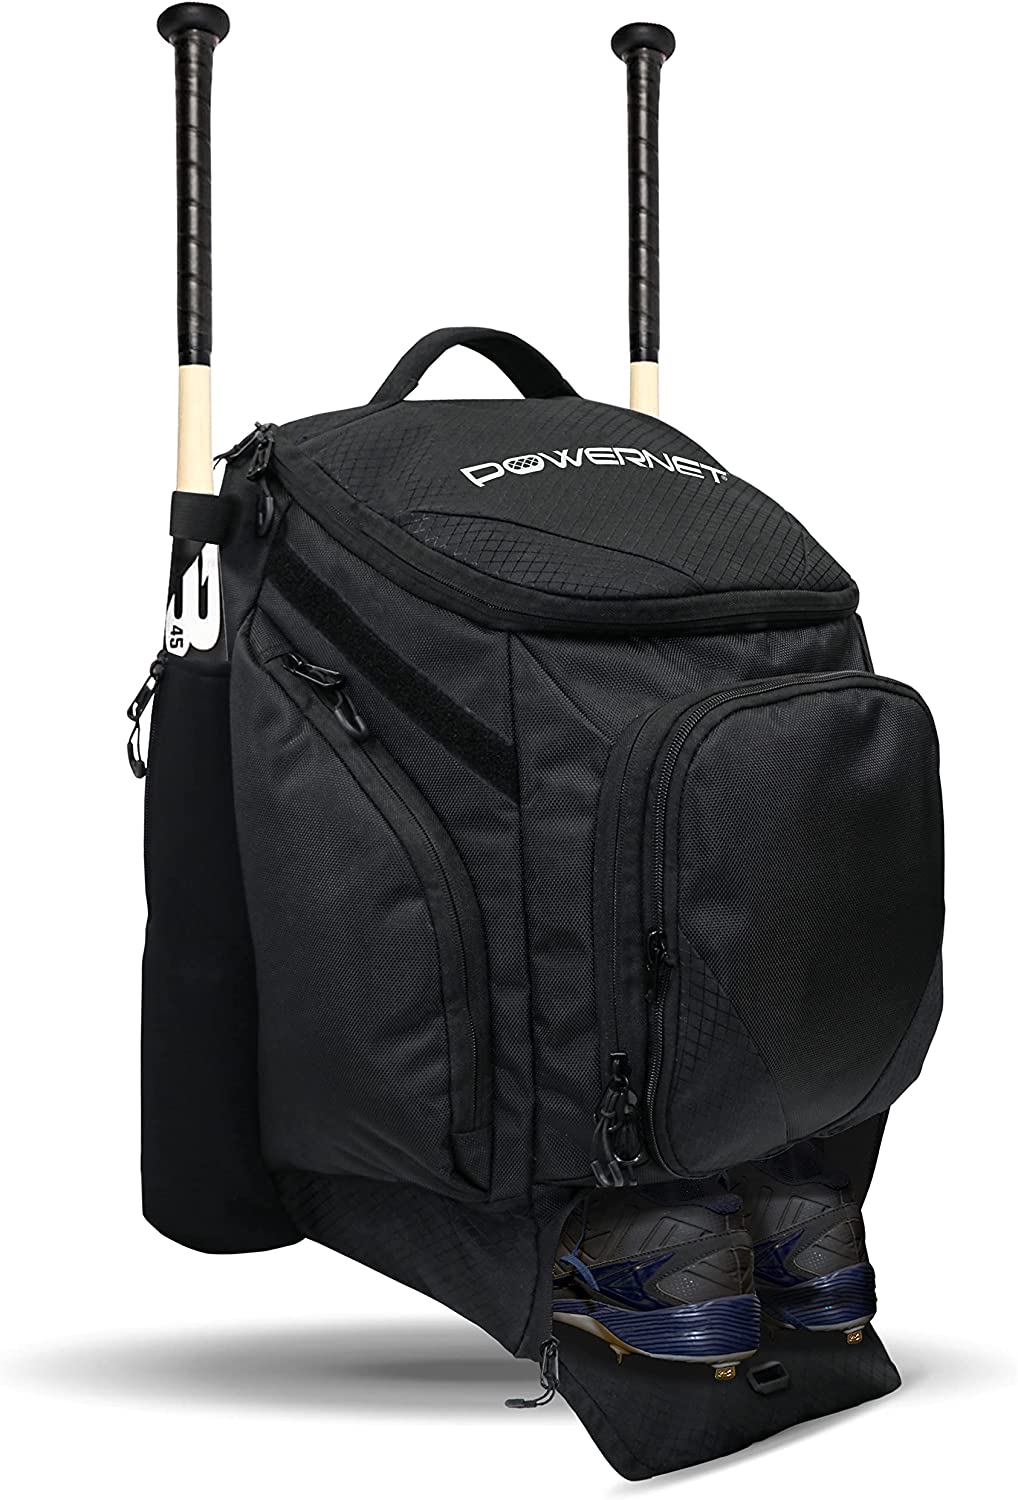 PowerNet Surge Baseball Softball Dual Bat and Equipment Backpack Bag